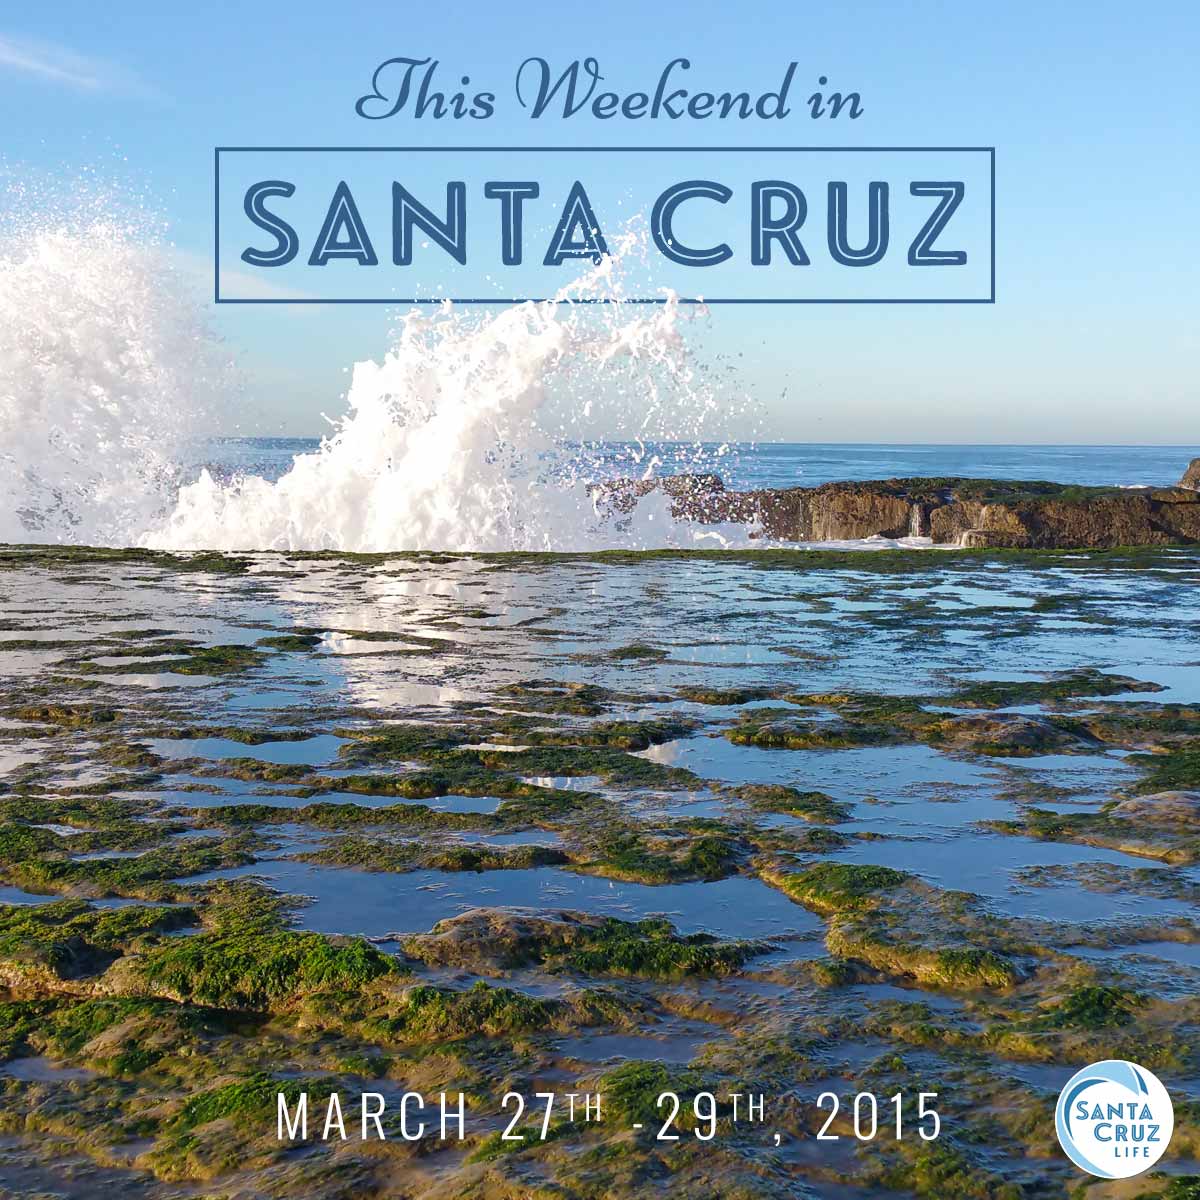 santa cruz weekend events: march 27, 2015